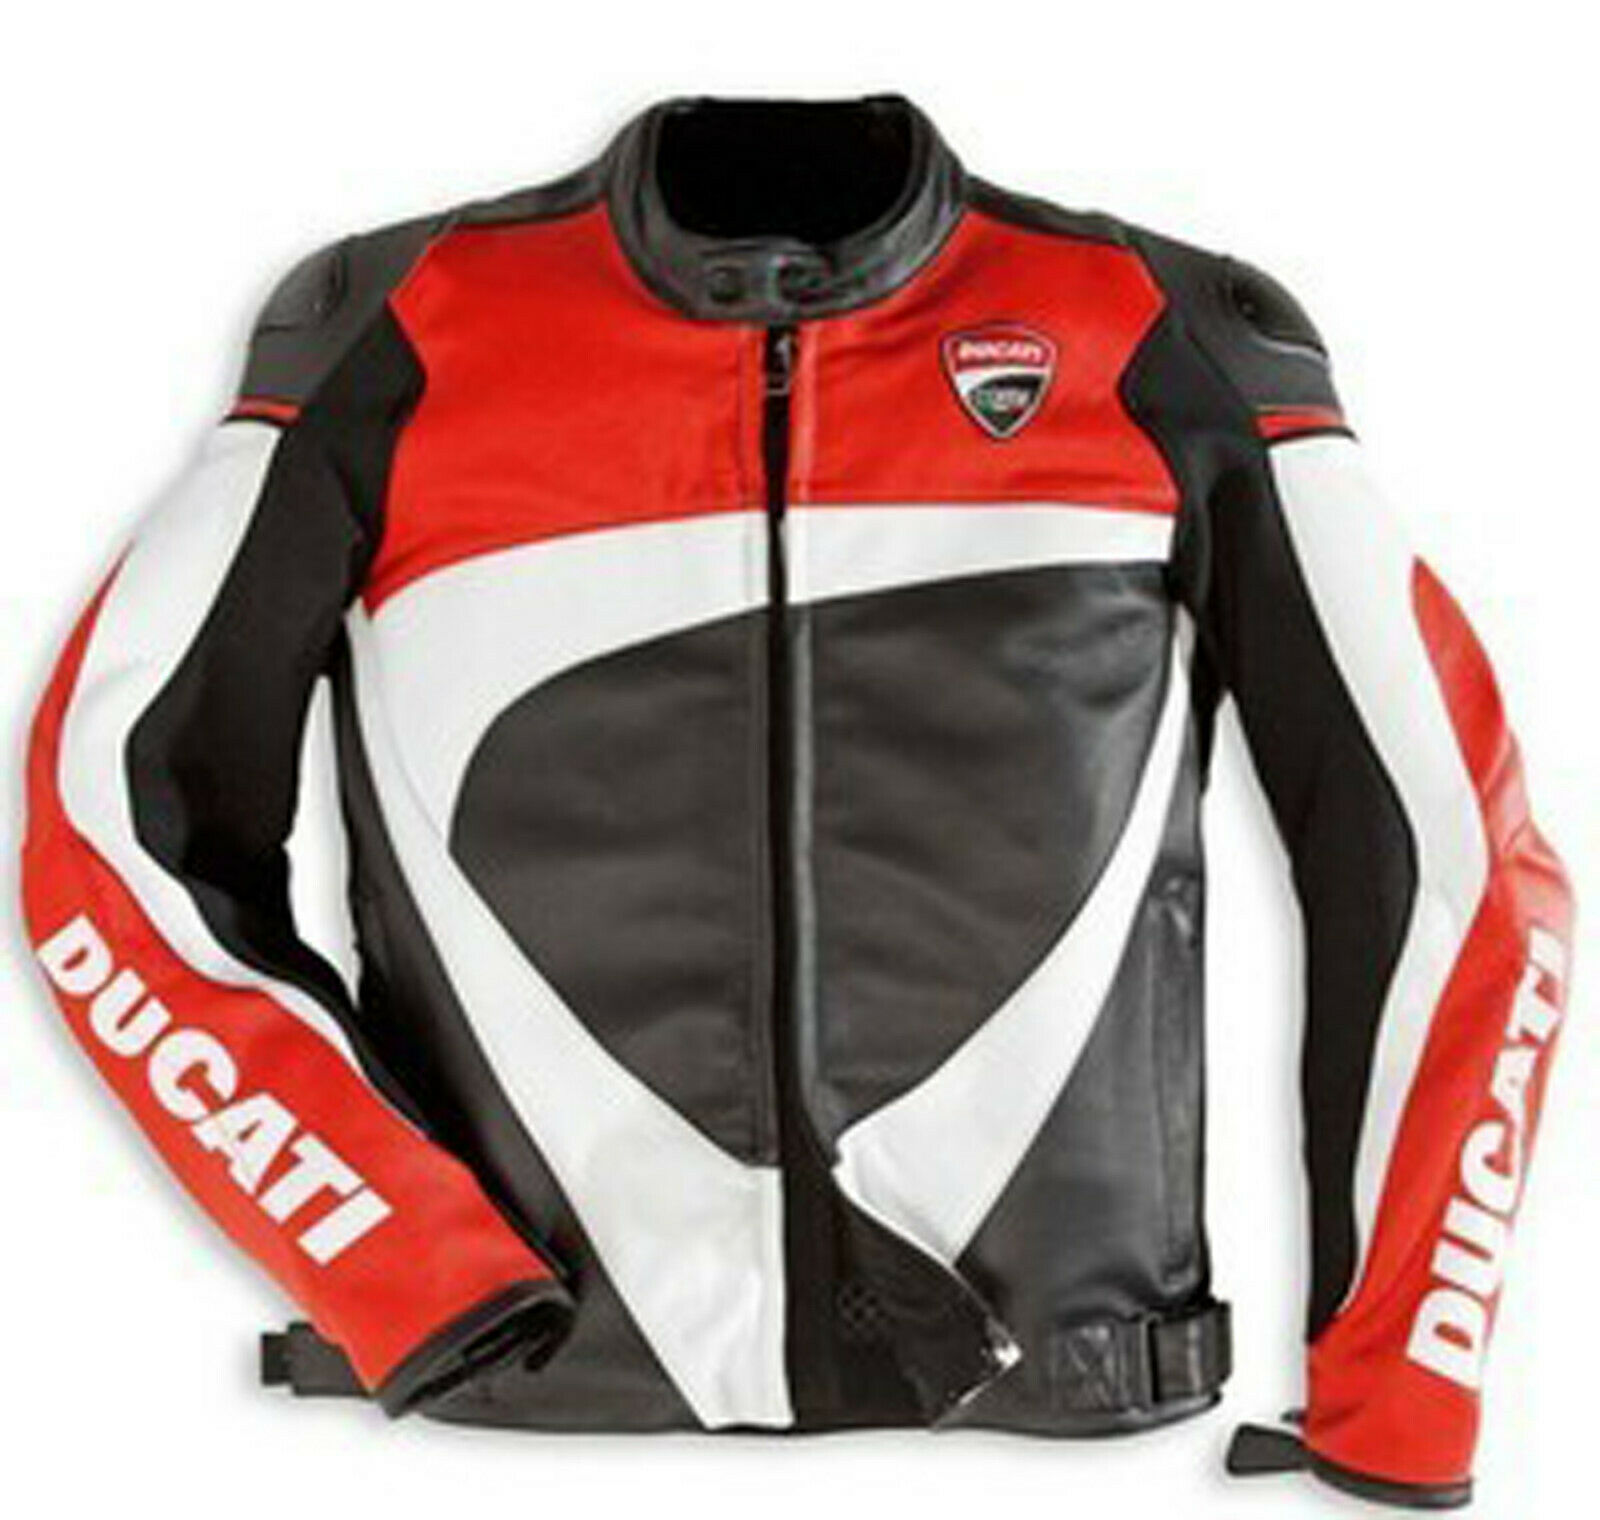 Ducati Motorcycle jacket